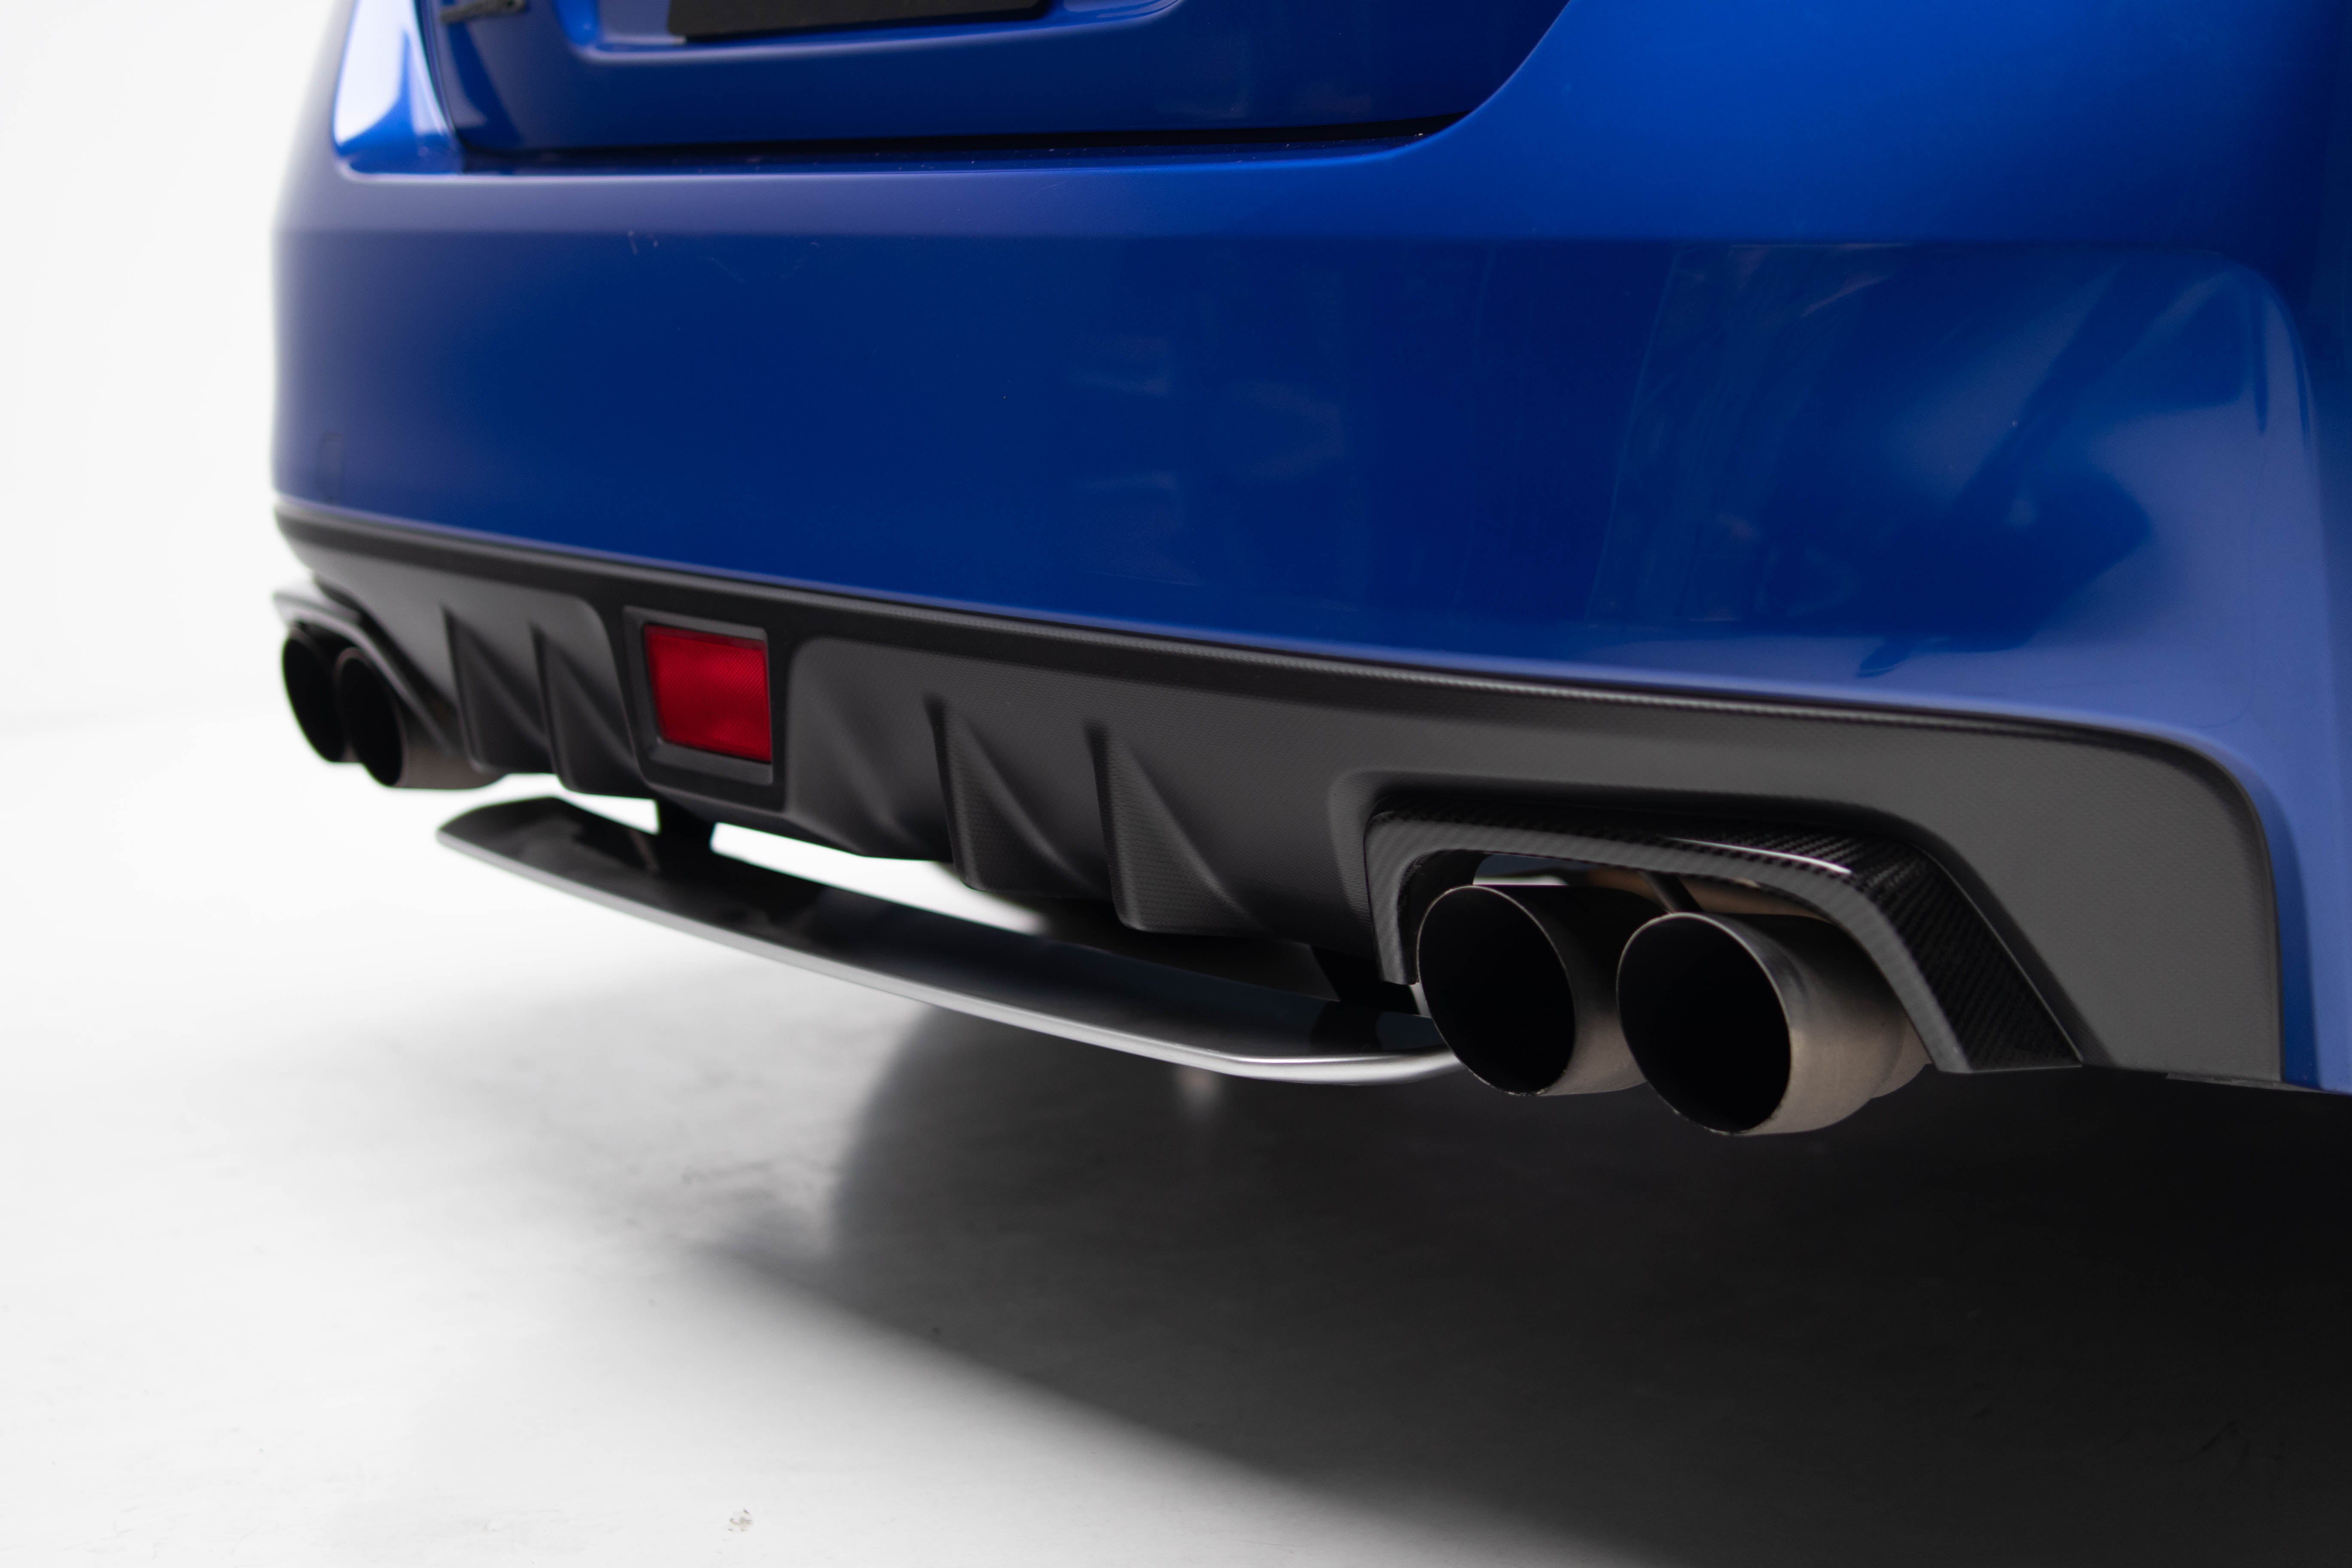 Zero Offset  STI Style Dry Carbon Exhausts Surrounds for 14-21 Subaru WRX - MODE Auto Concepts